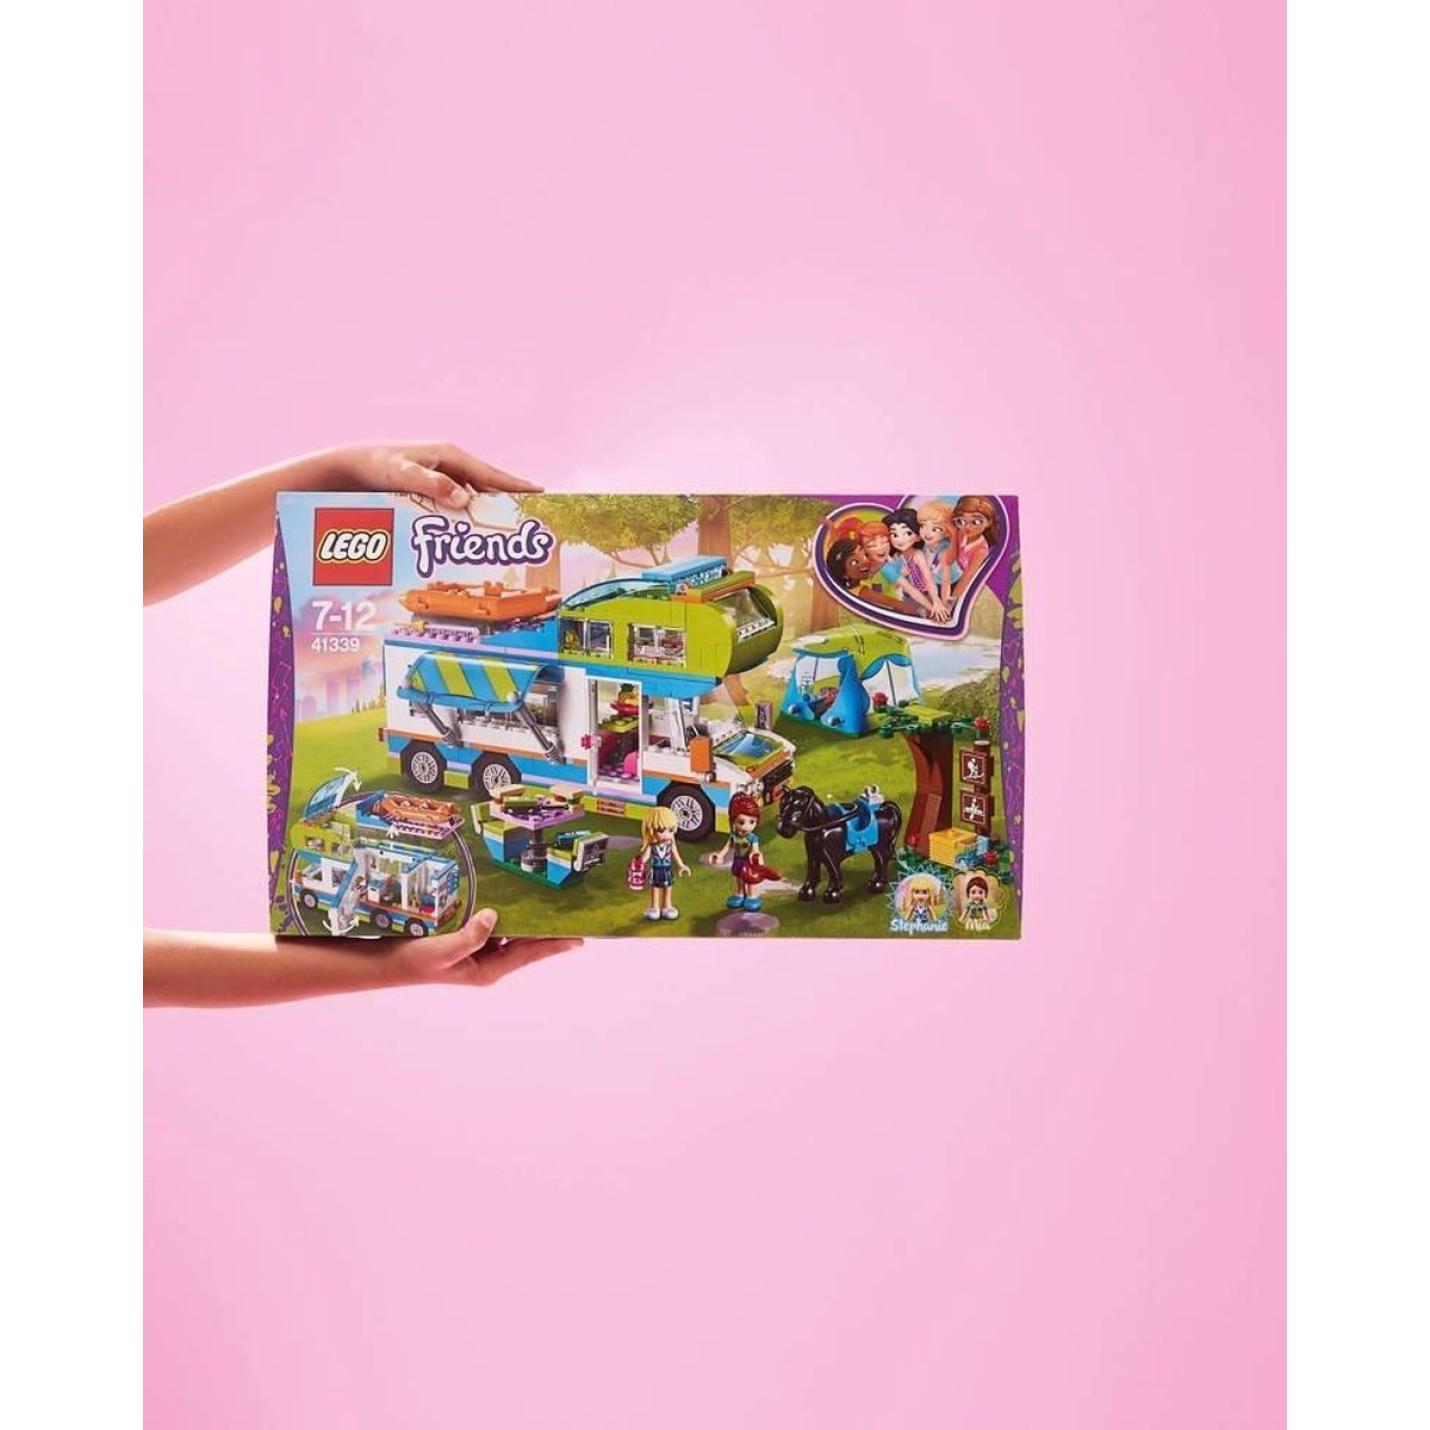 LEGO Friends Mia's Camper - 41339 5